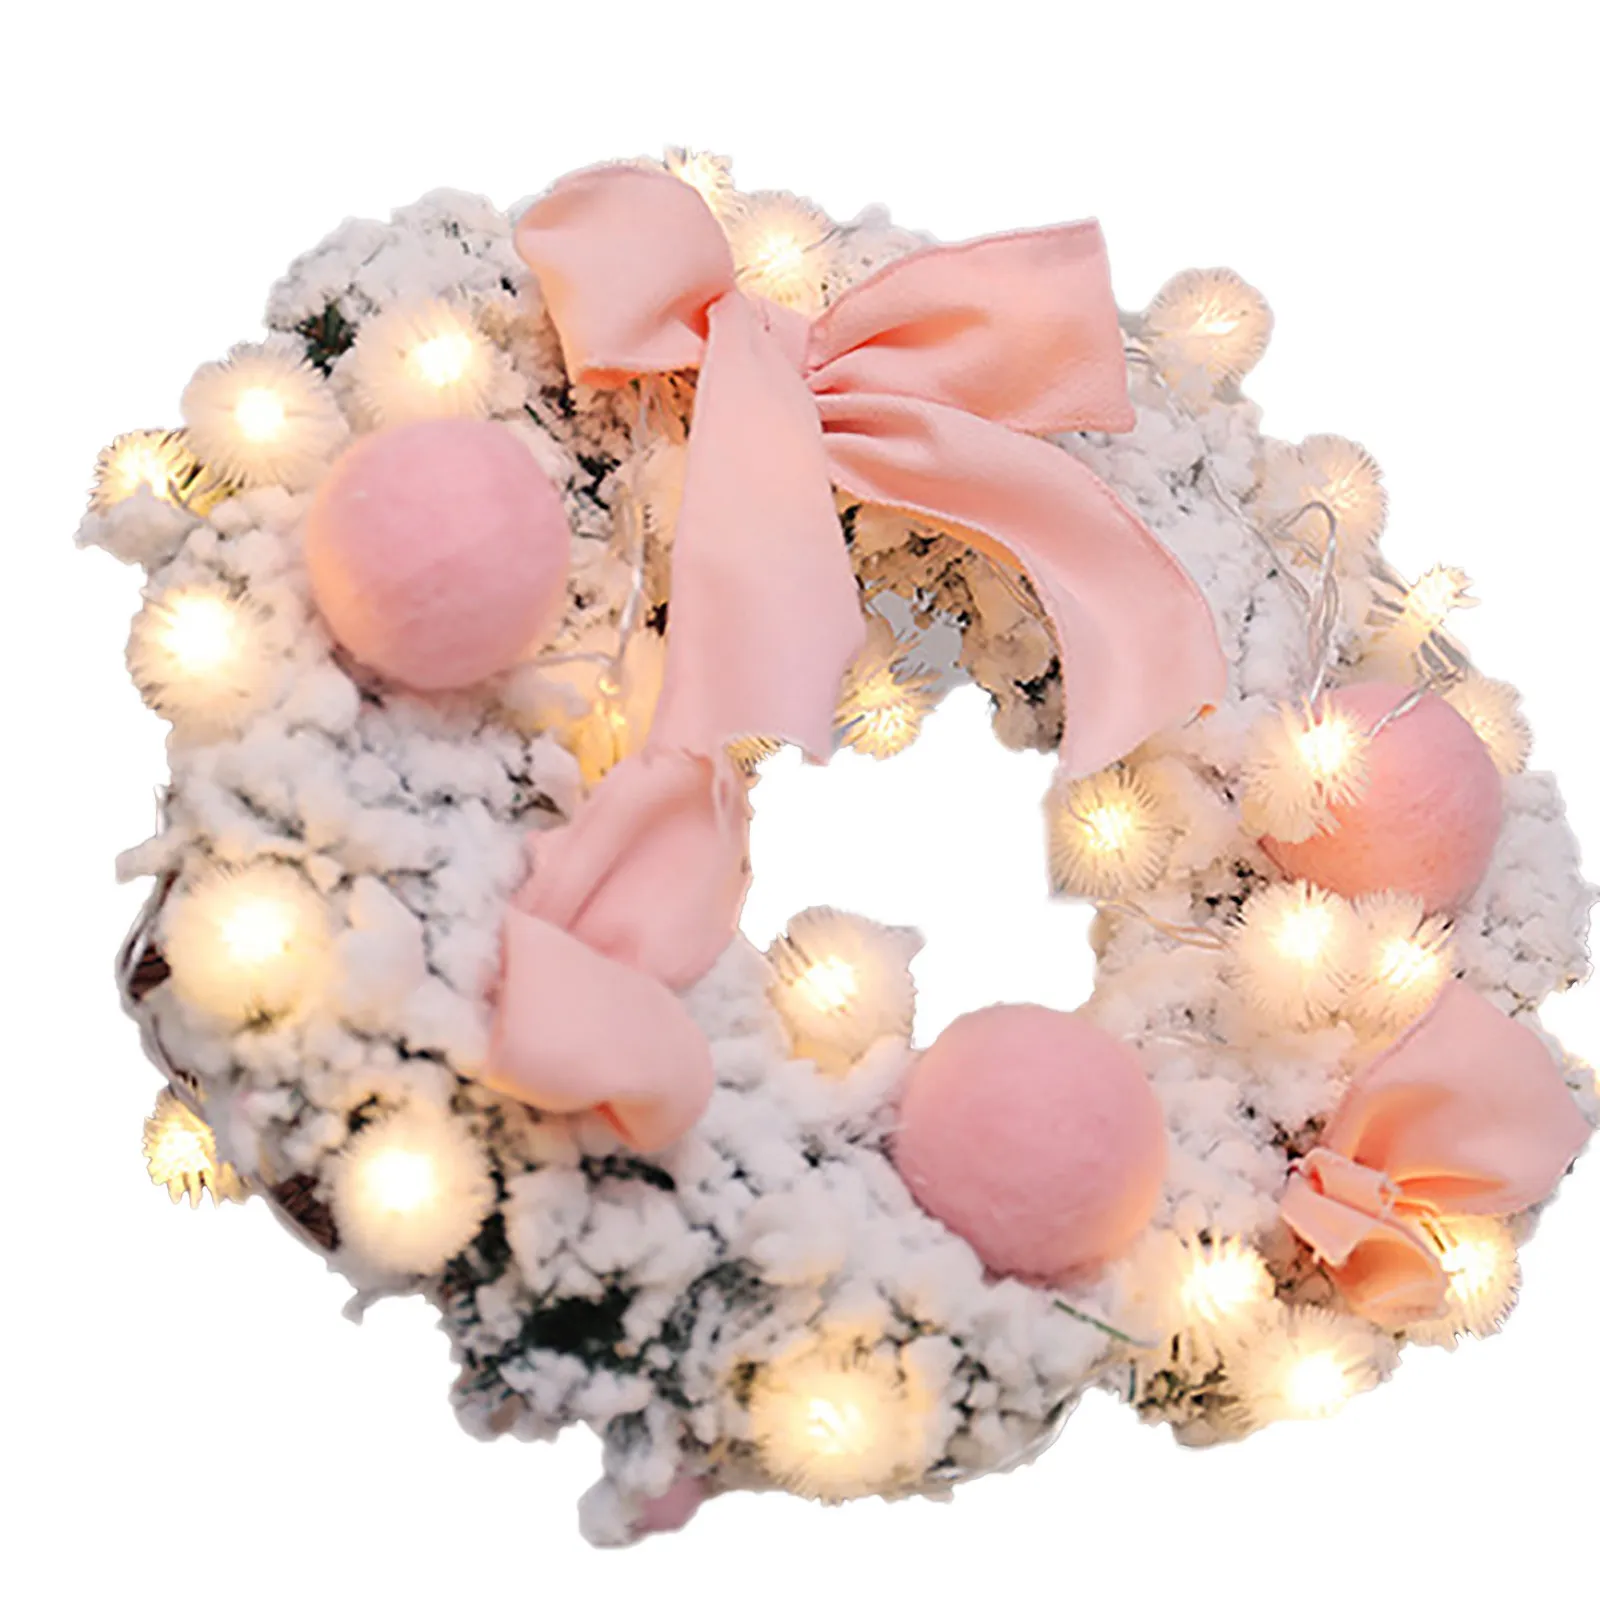 40# Pink Christmas Garland Celebration Mini Desktop Decoration Colored Balls + Warm Christmas Wreath Home Festival Ornaments 201127